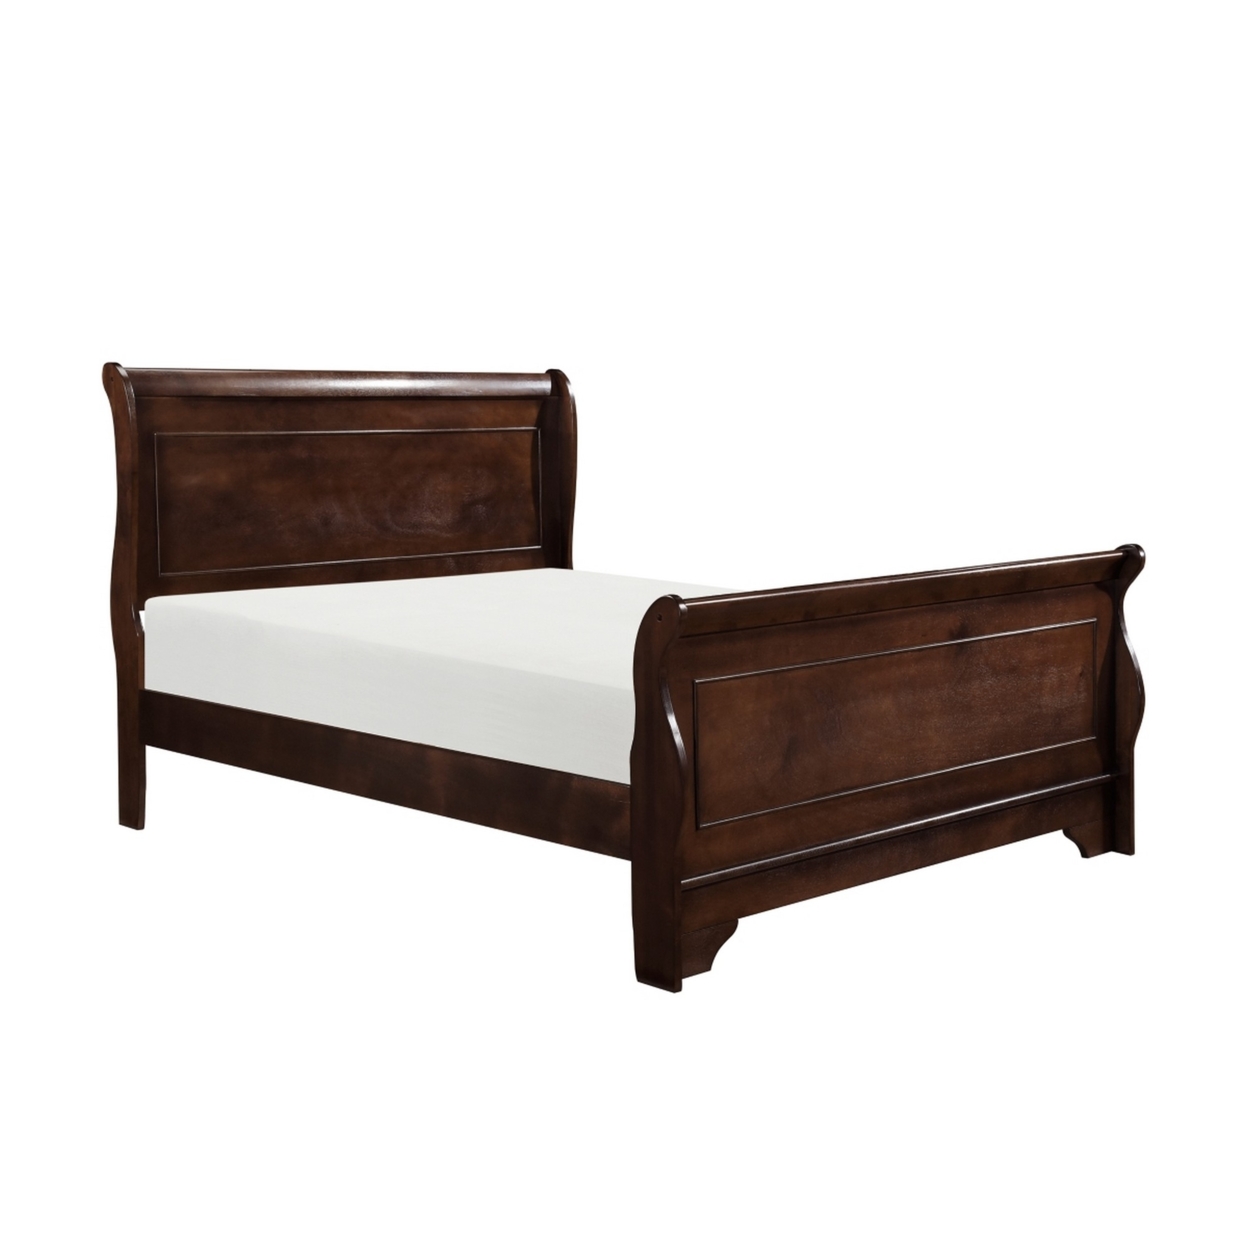 Transitional Queen Sleigh Style Bed, Dark Wood Frame, Cherry Brown Finish- Saltoro Sherpi